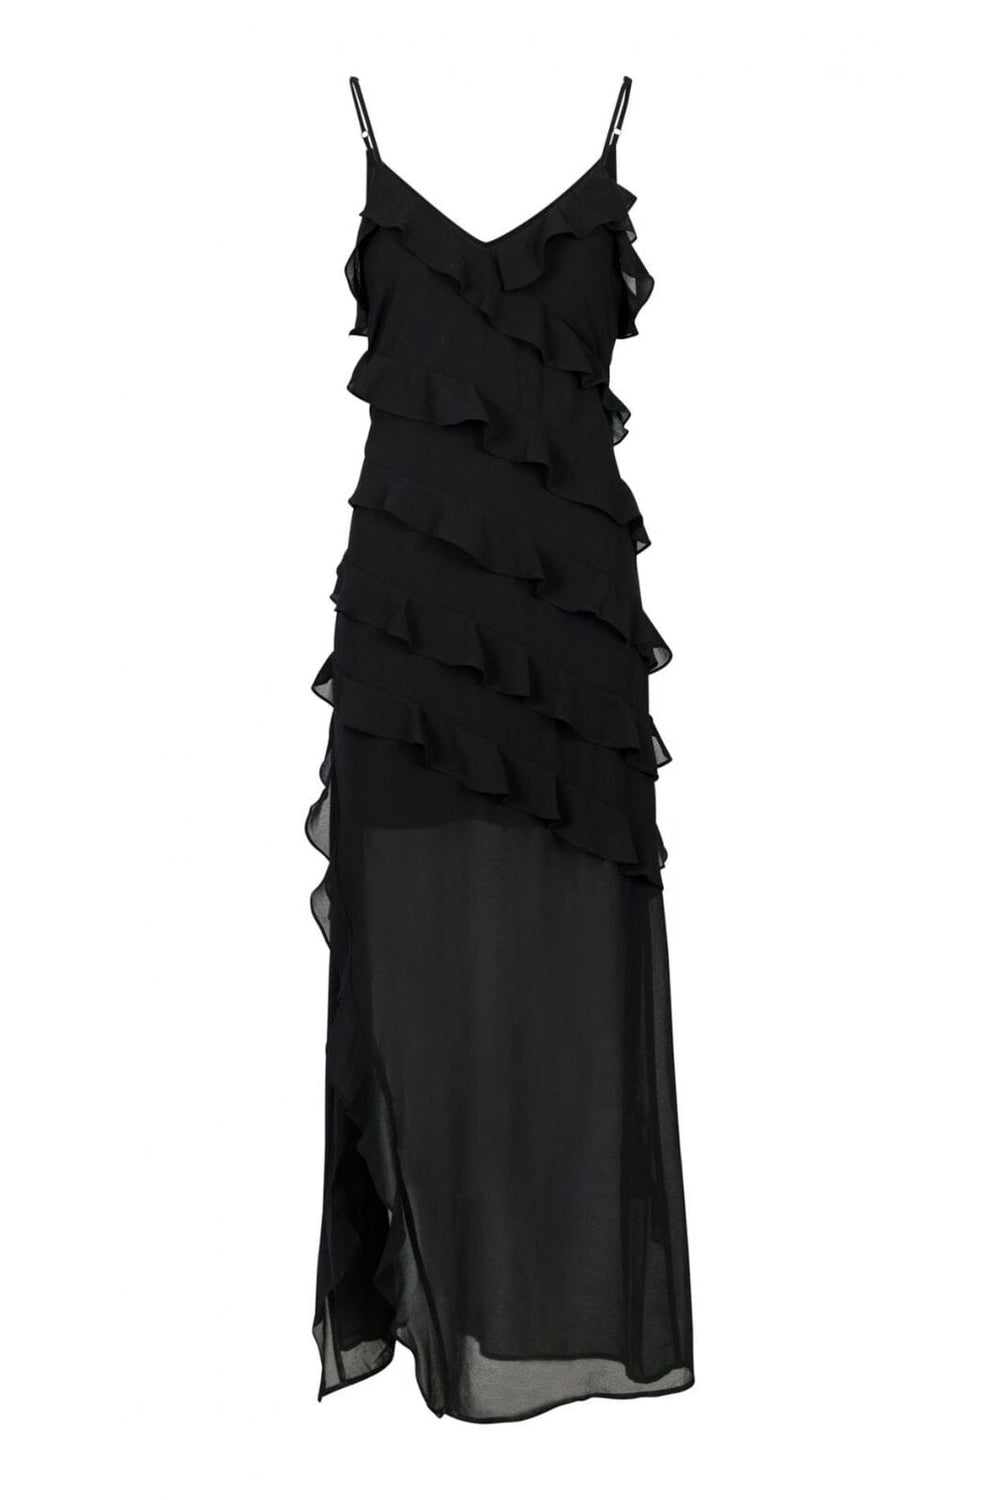 Neo Noir - Palazzo Frill Dress - Black Kjoler 